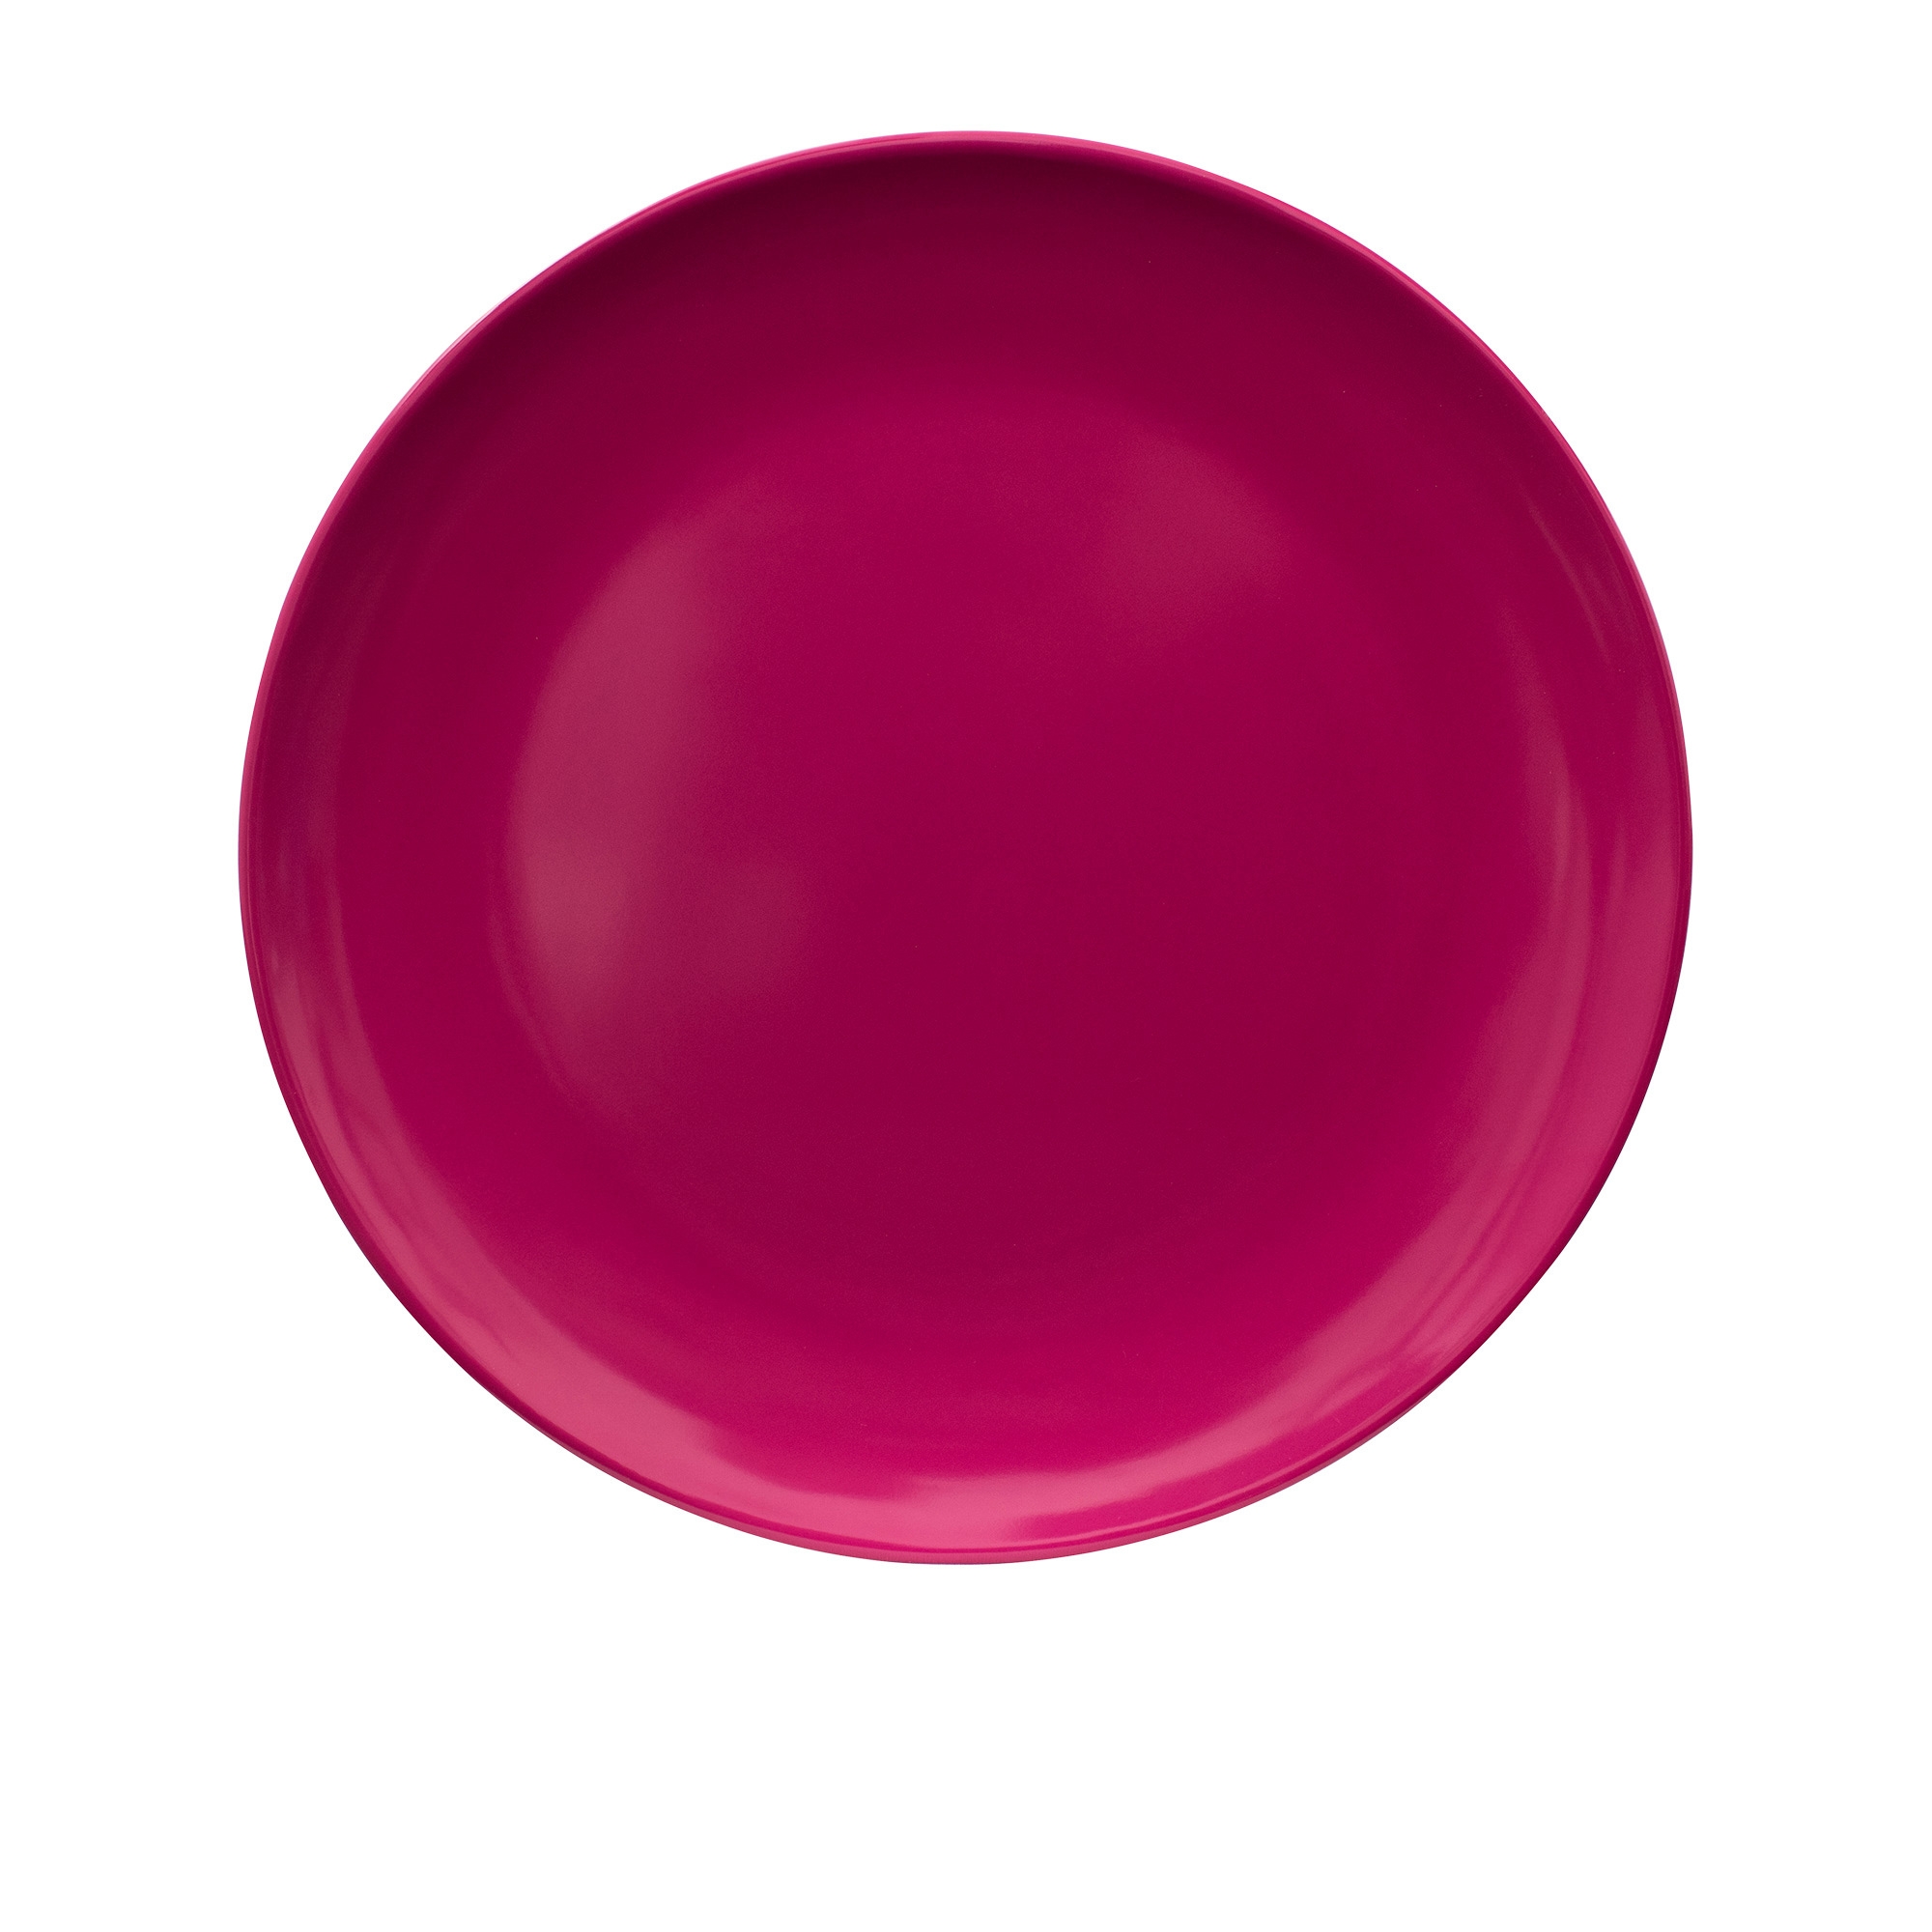 Serroni Melamine Plate 21cm Fuchsia Pink Image 1